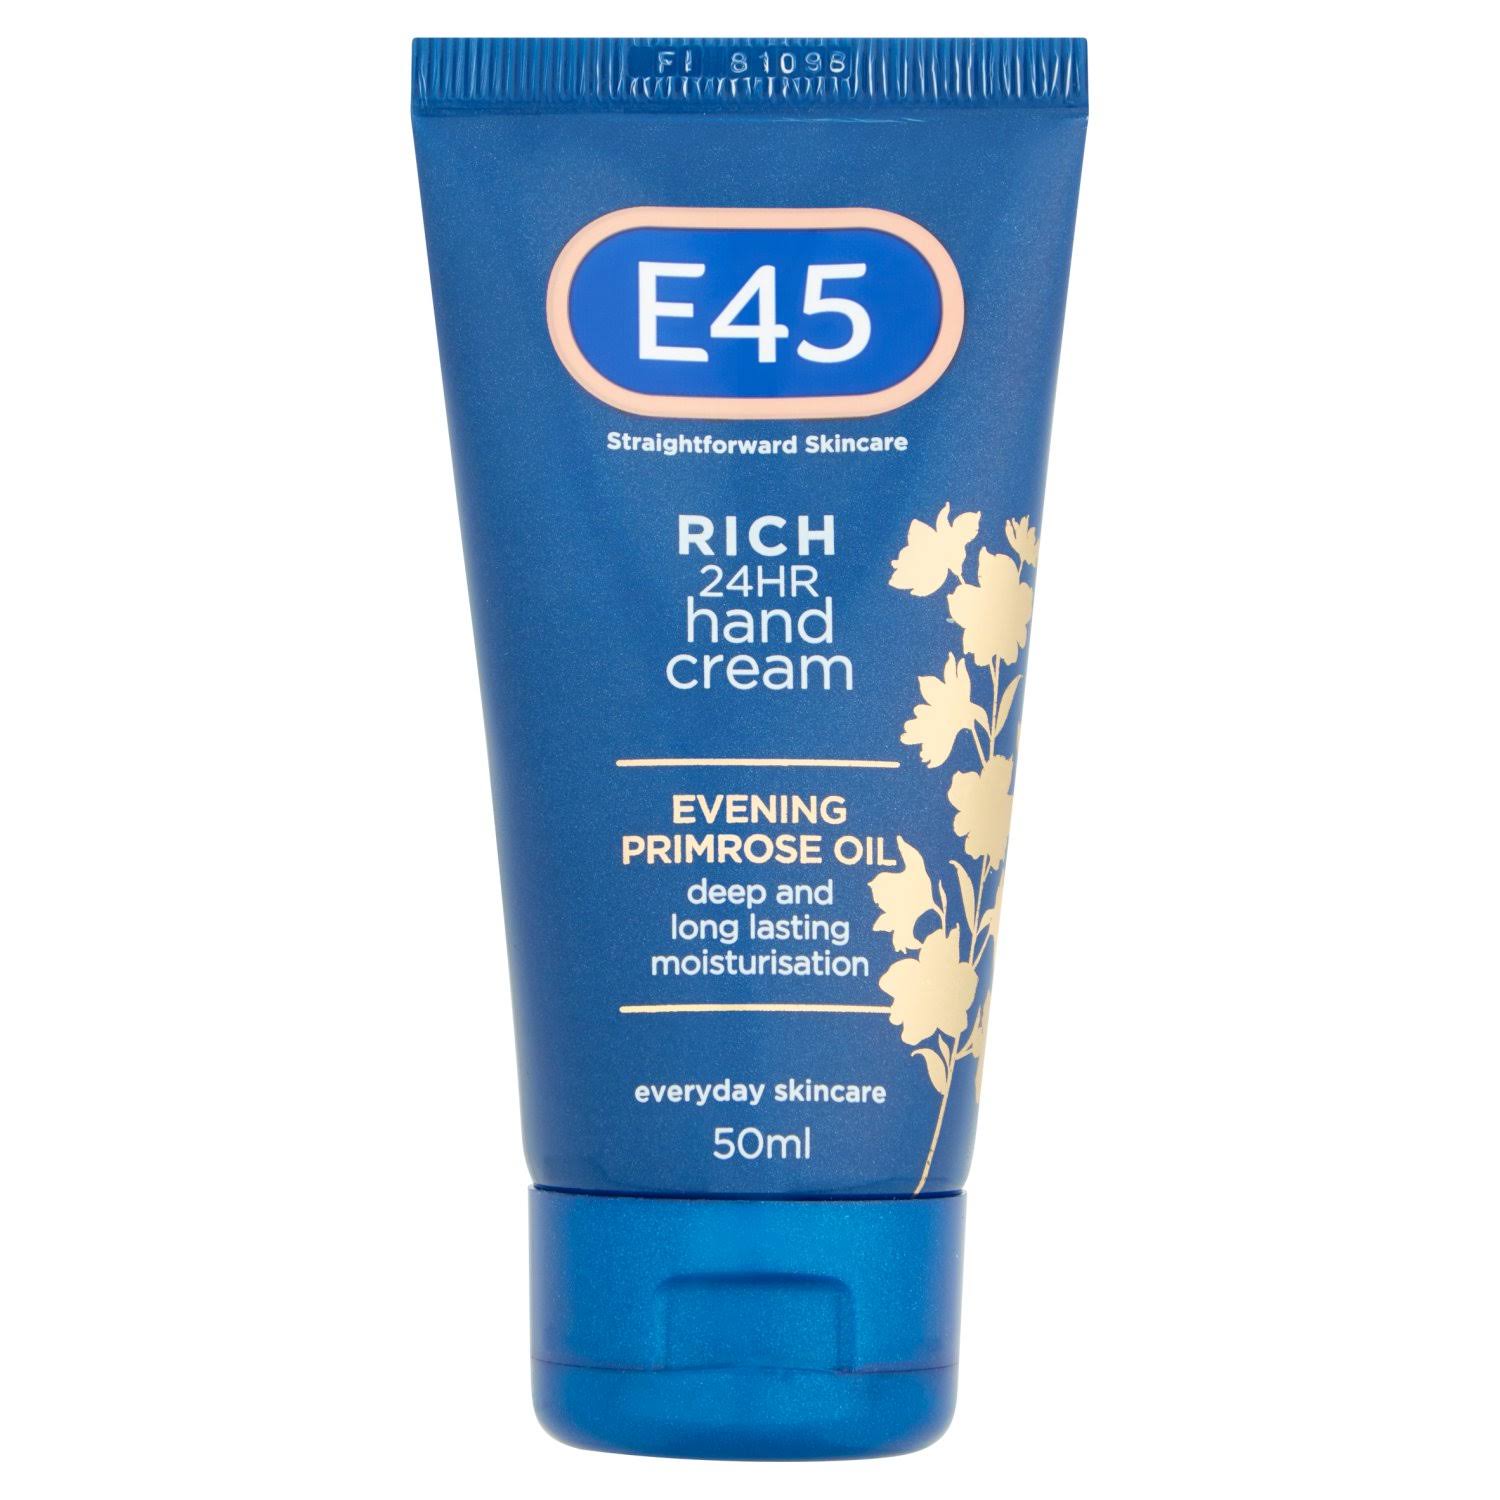 E45 Rich Hand Cream - 50ml